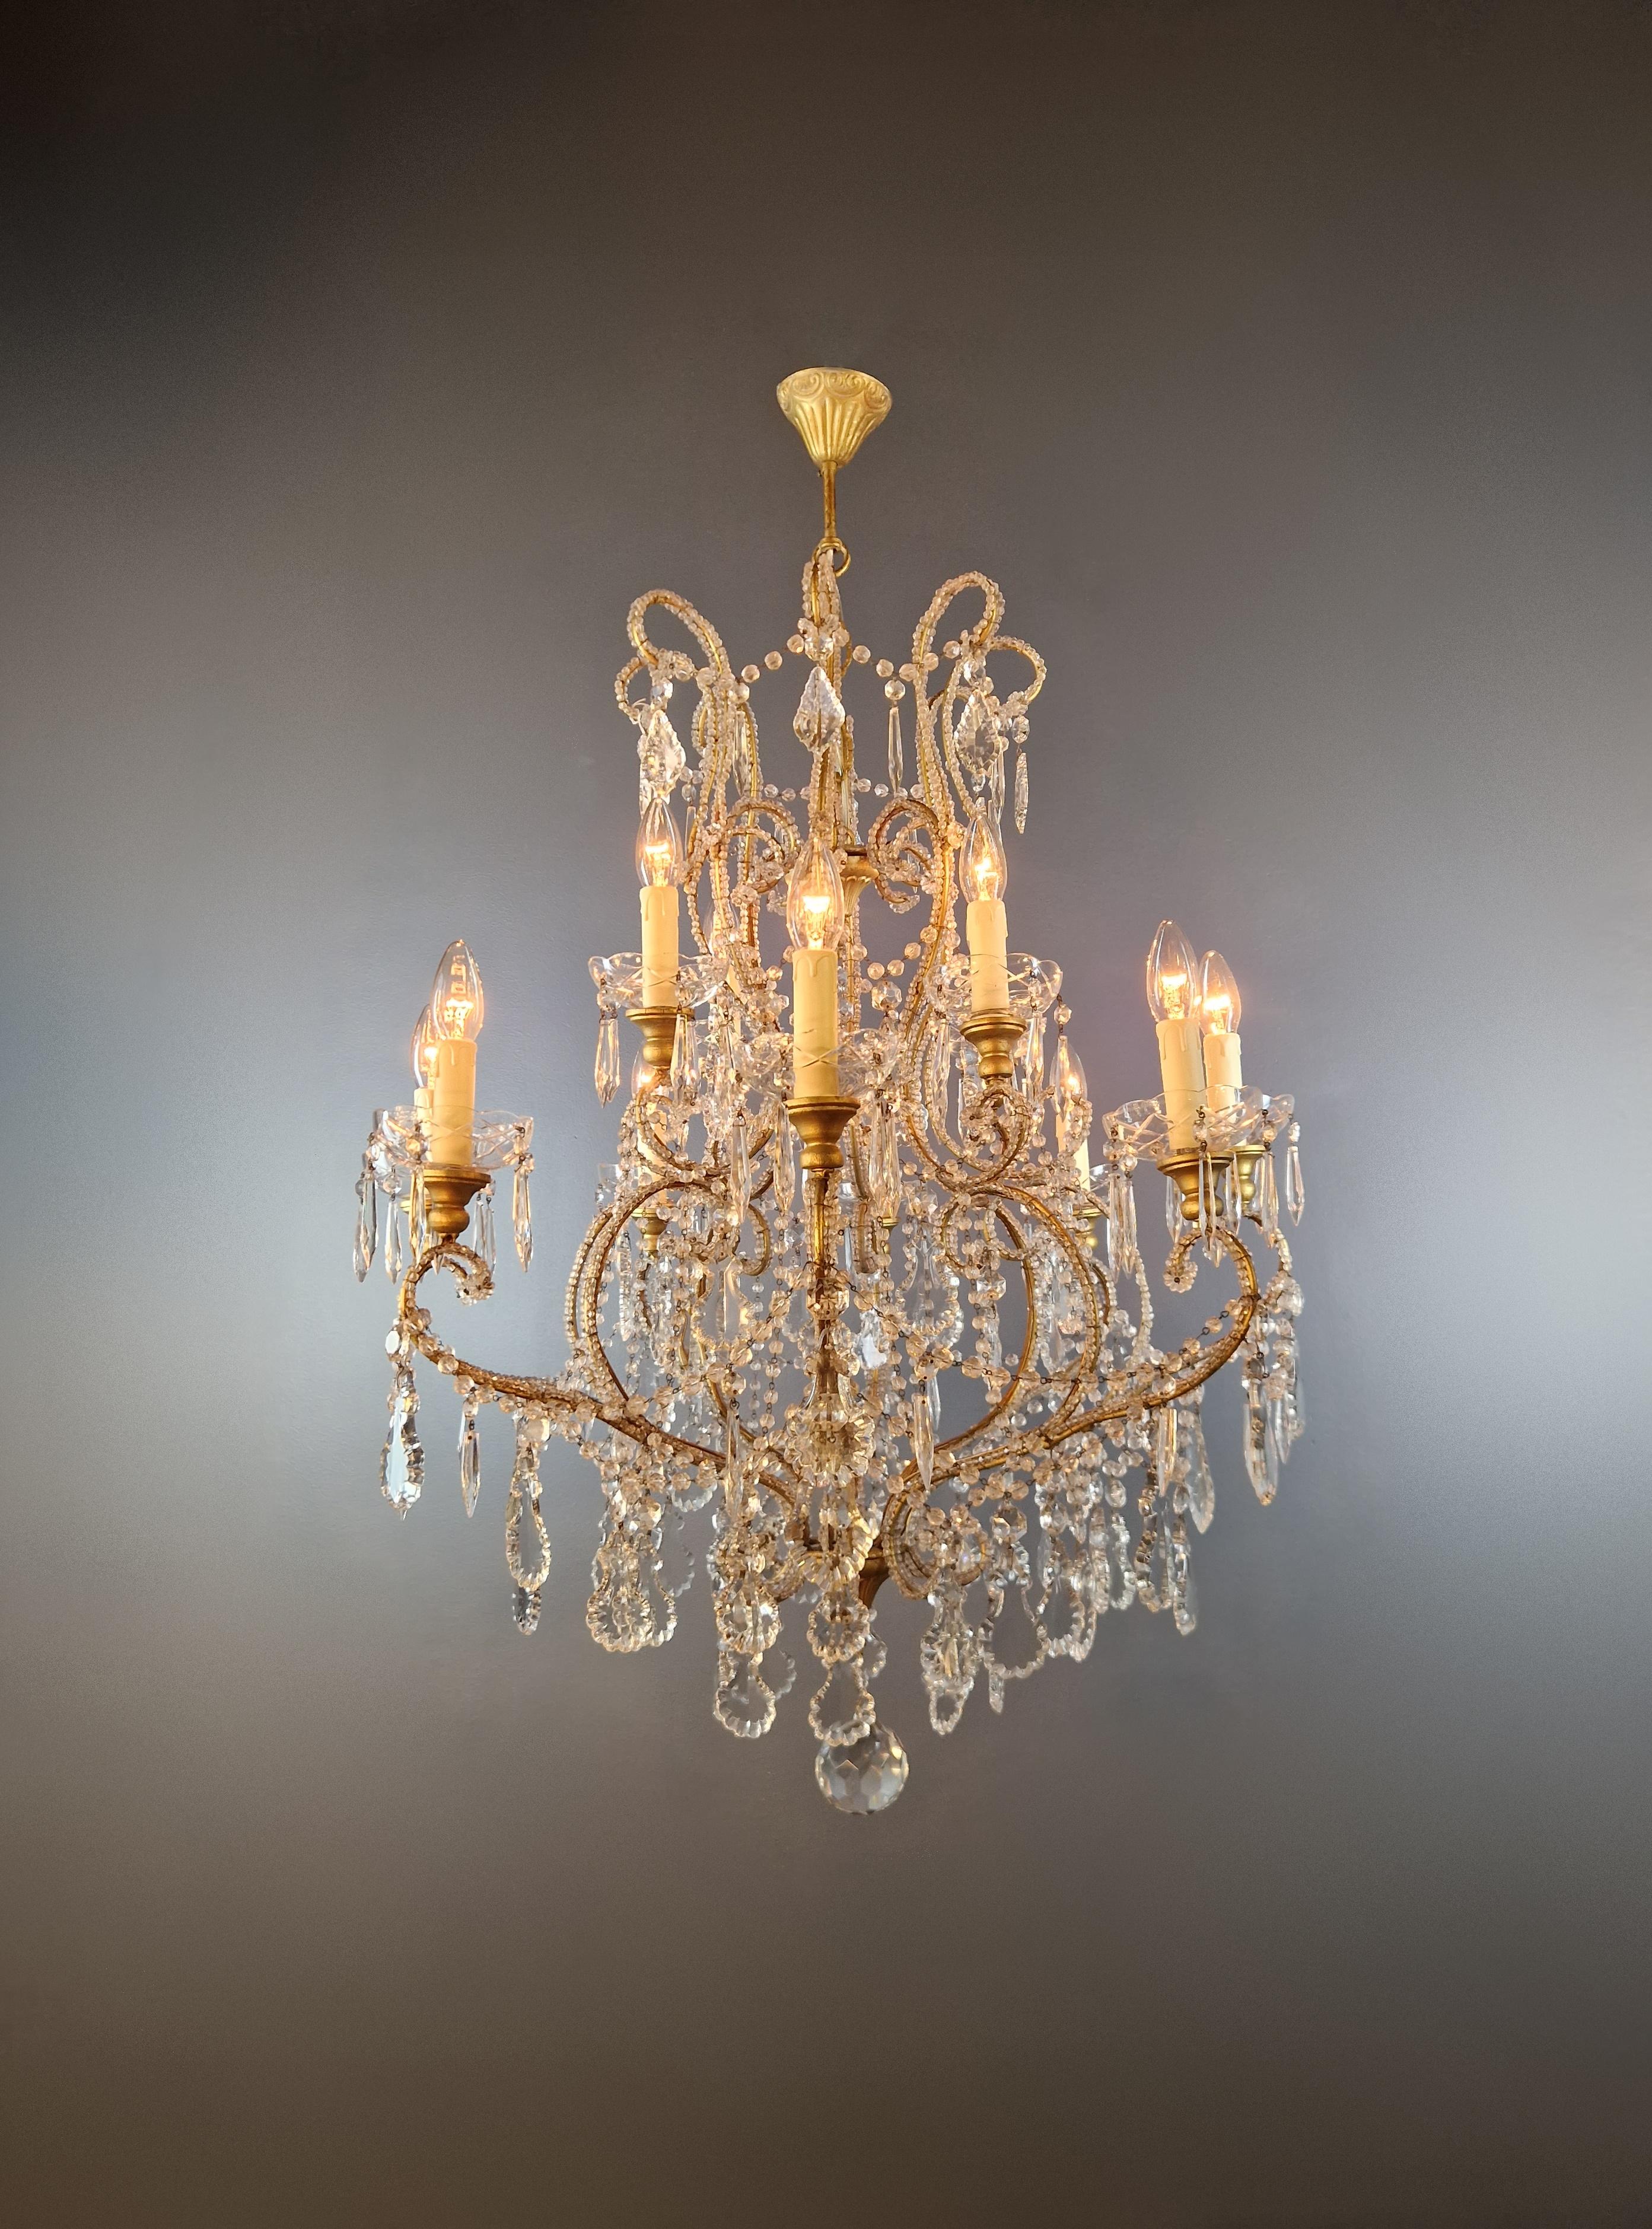 18th Century and Earlier Brass Crystal Chandelier Antique Ceiling Lamp Lustre Art Nouveau Lamp For Sale